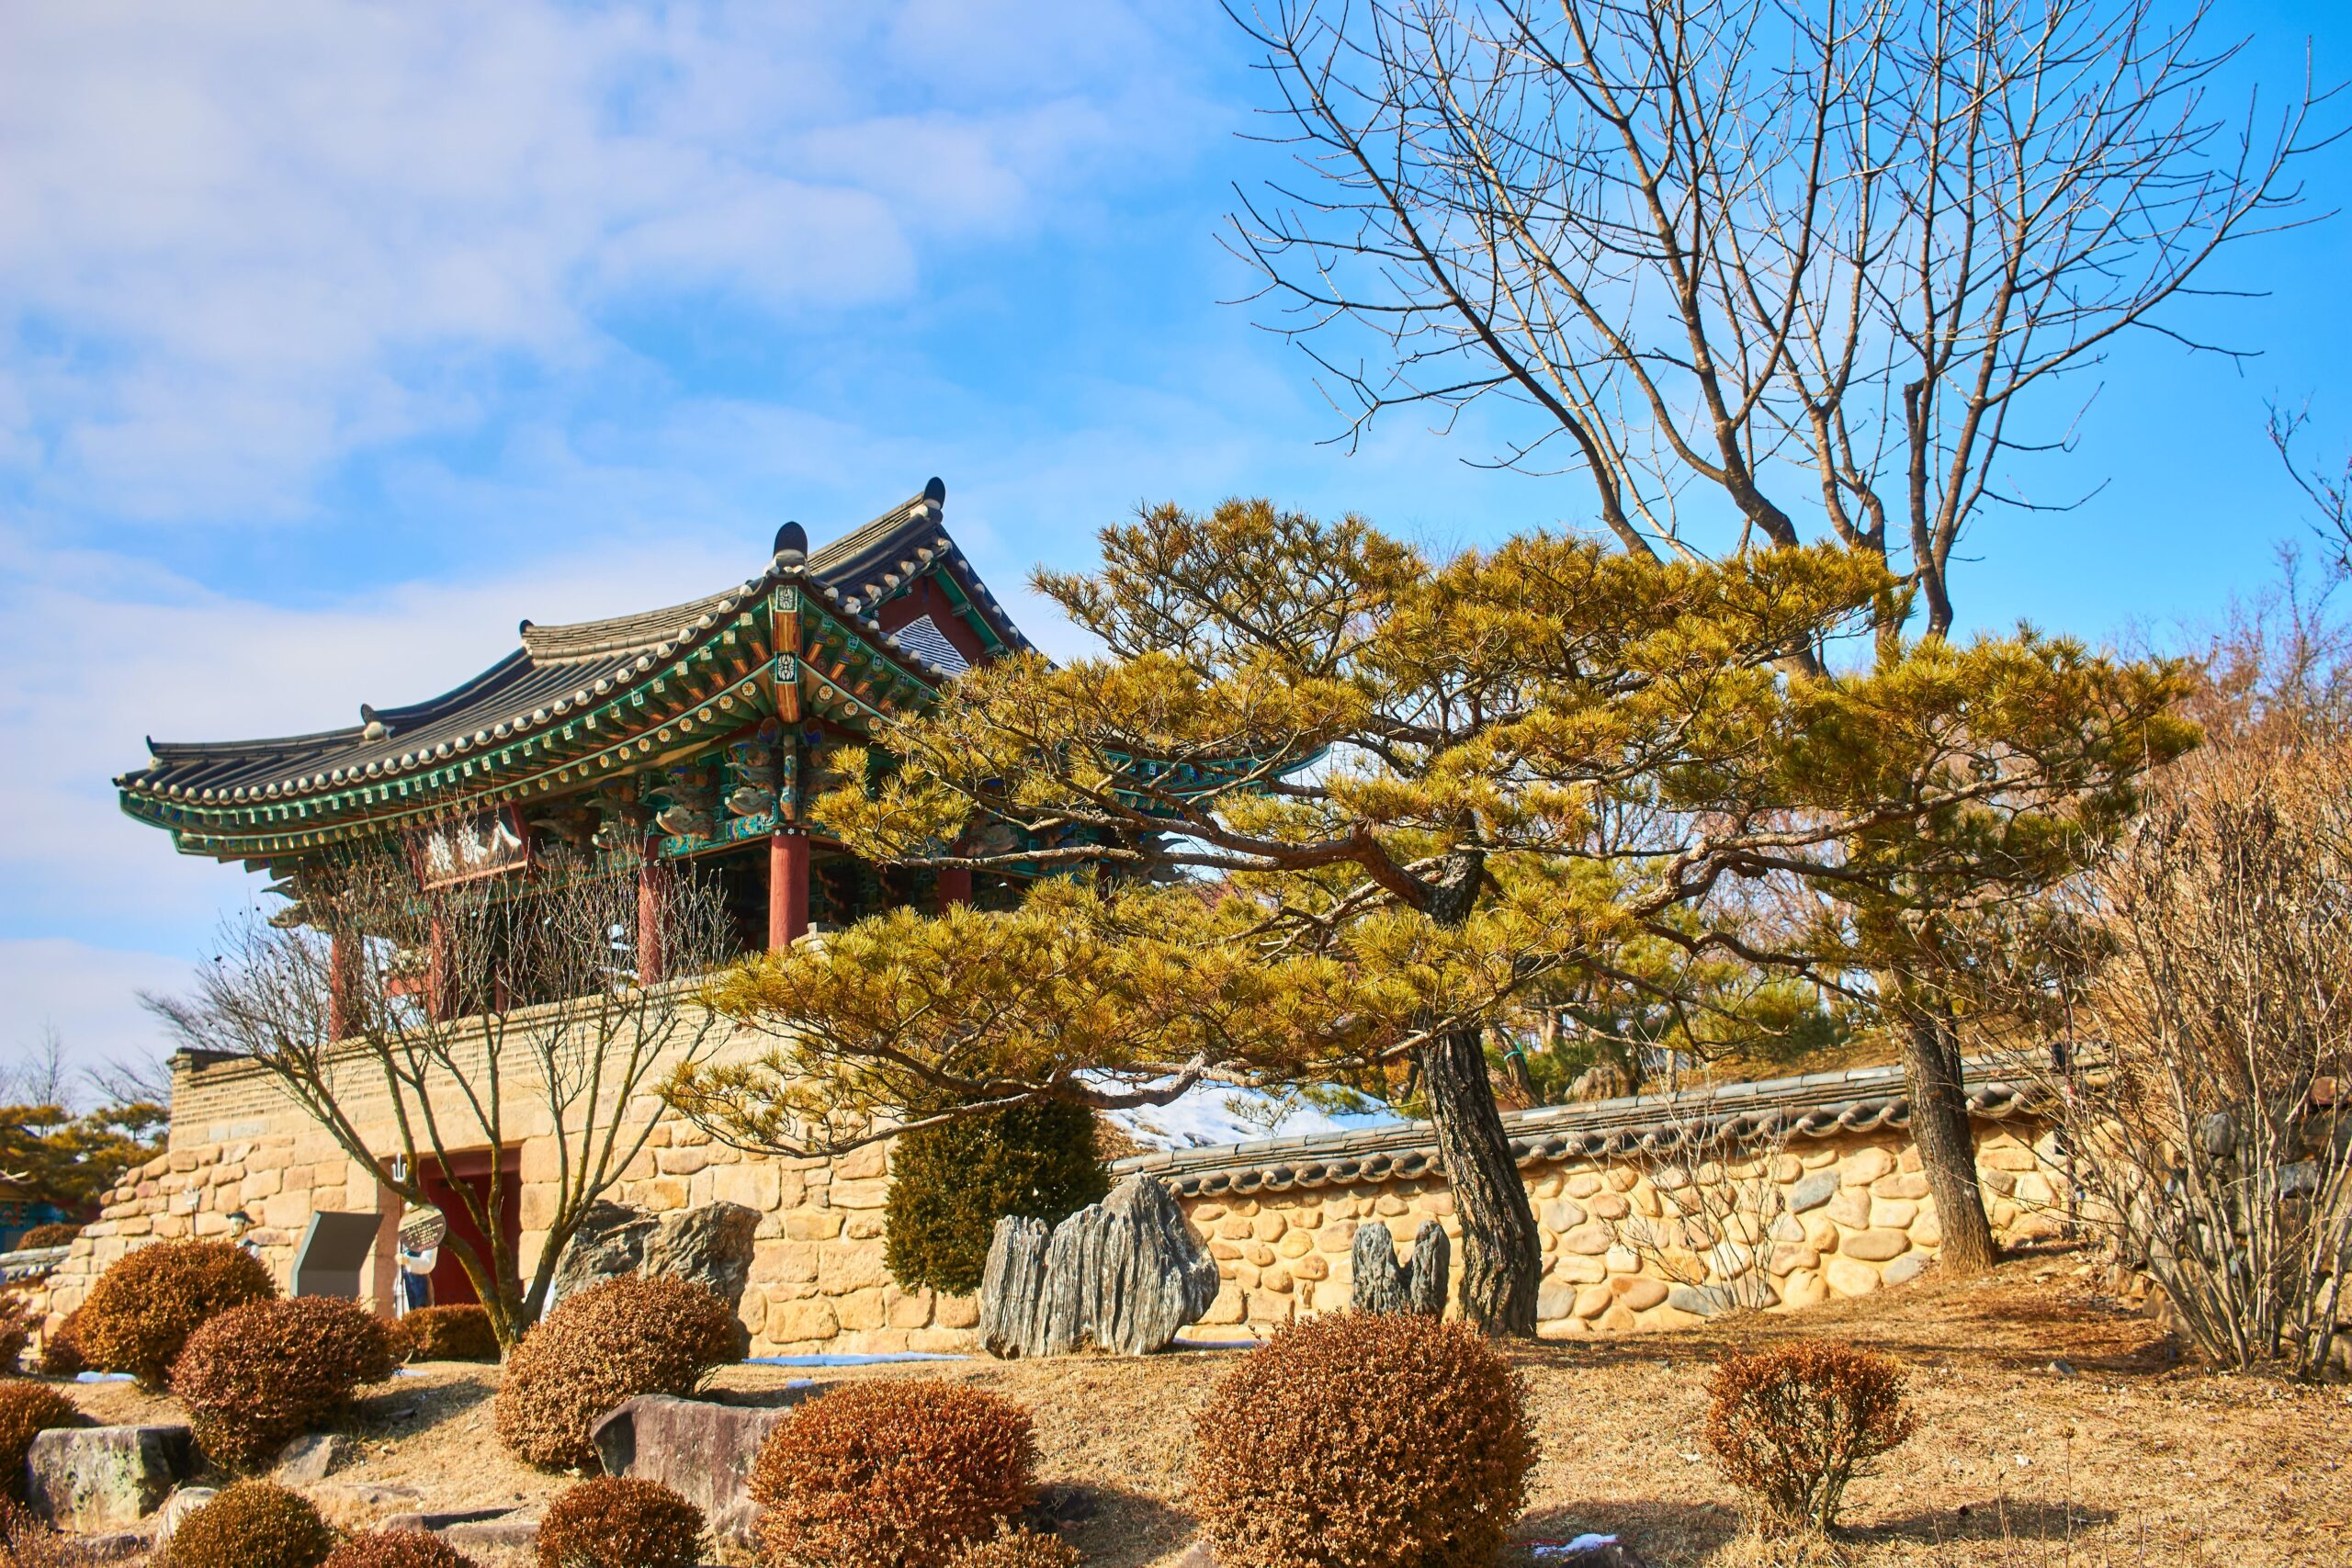 Cheongpung-myeon, Jecheon-si, South Korea